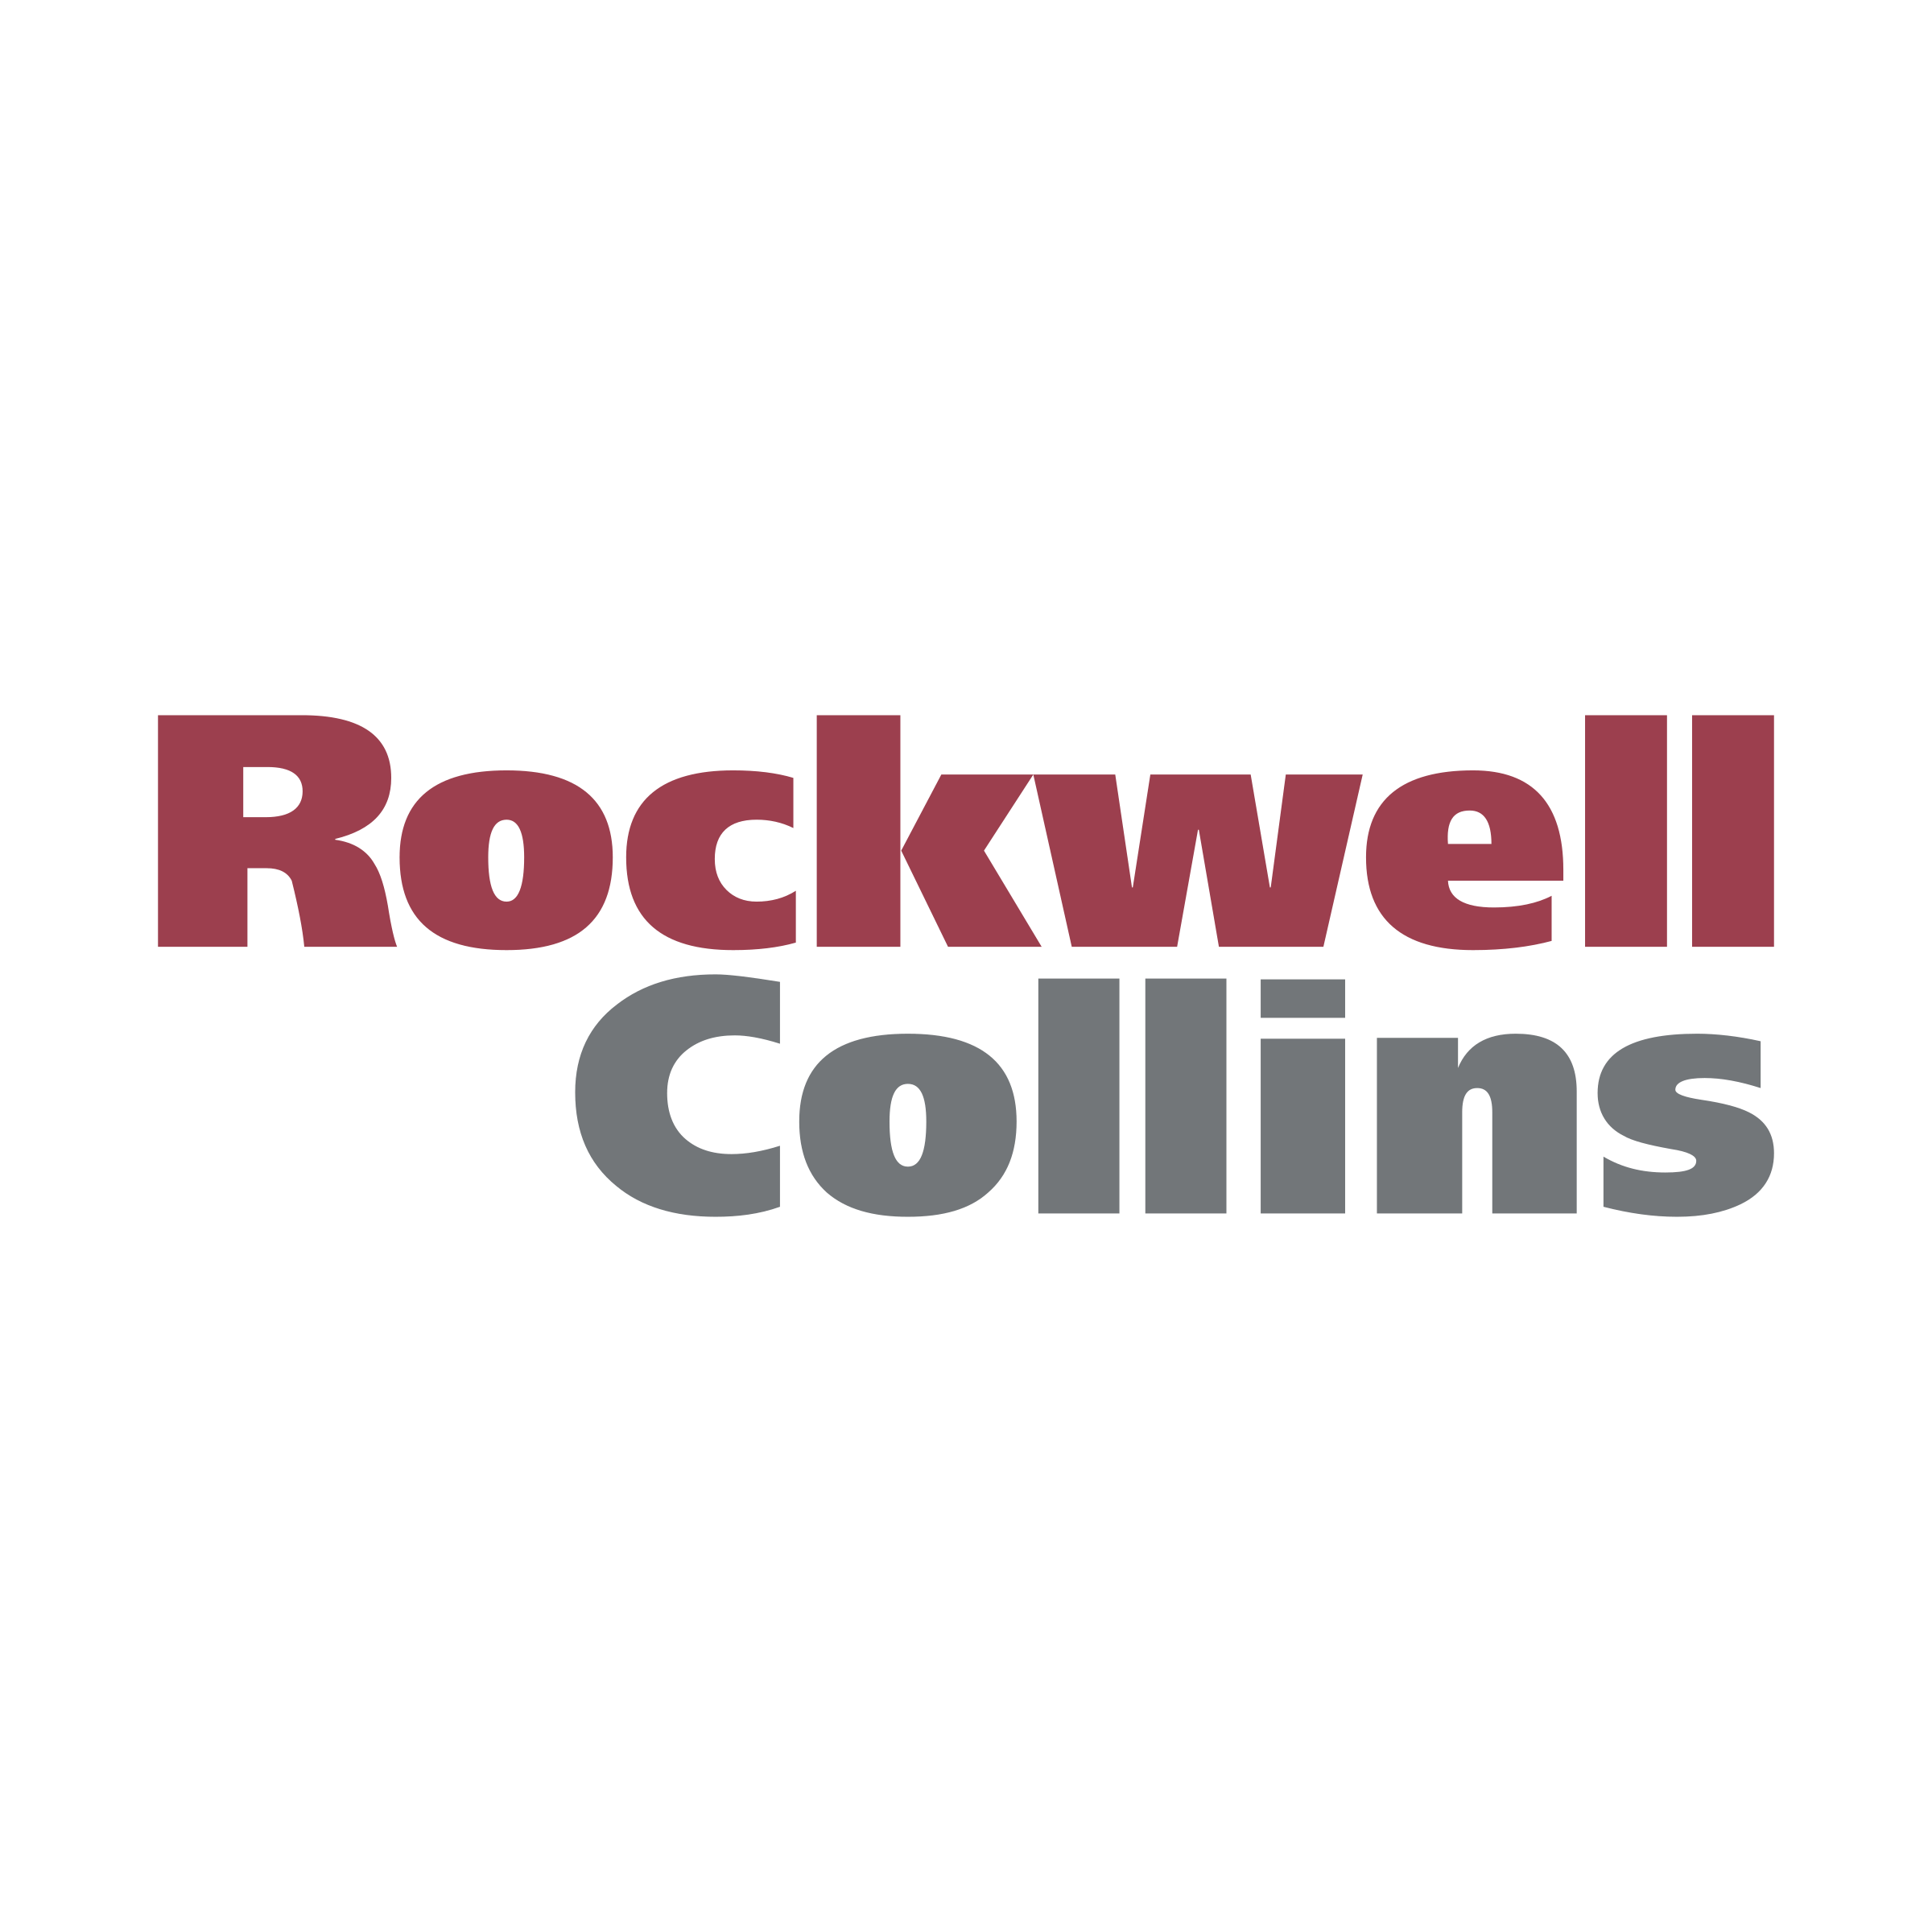 Collins Logo - Rockwell Collins Logo PNG Transparent & SVG Vector - Freebie Supply